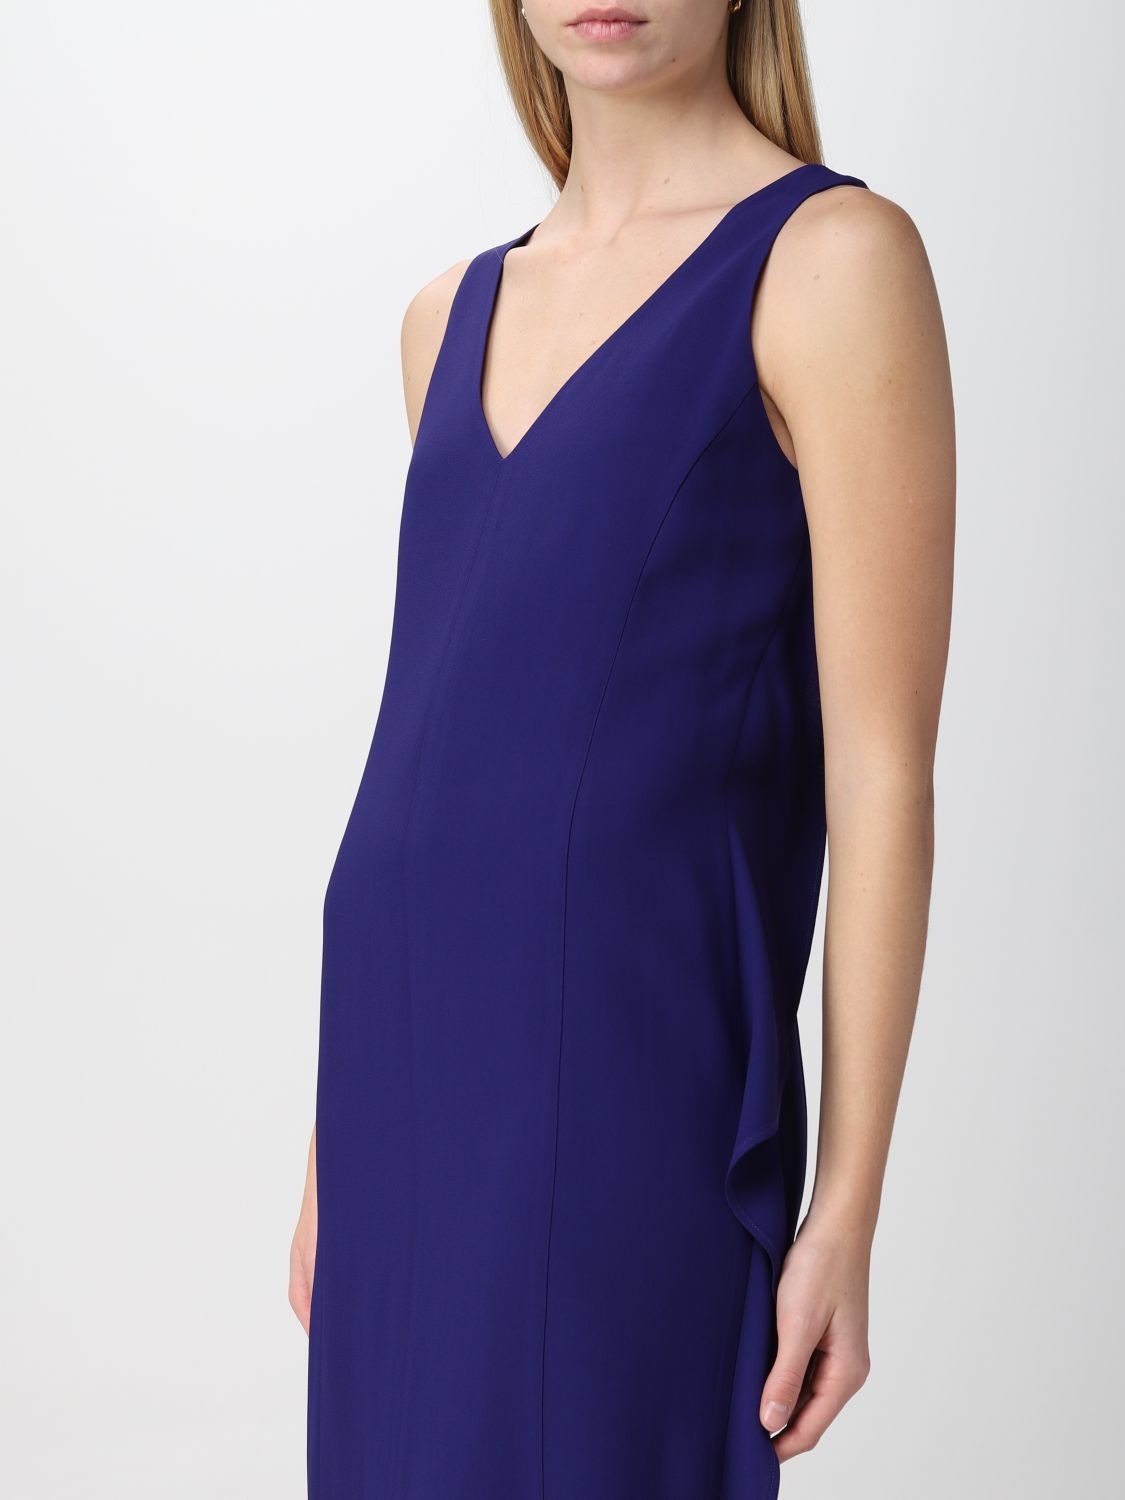 EMPORIO ARMANI: dress for woman - Blue | Emporio Armani dress 3R2A732NQ2Z  online on 